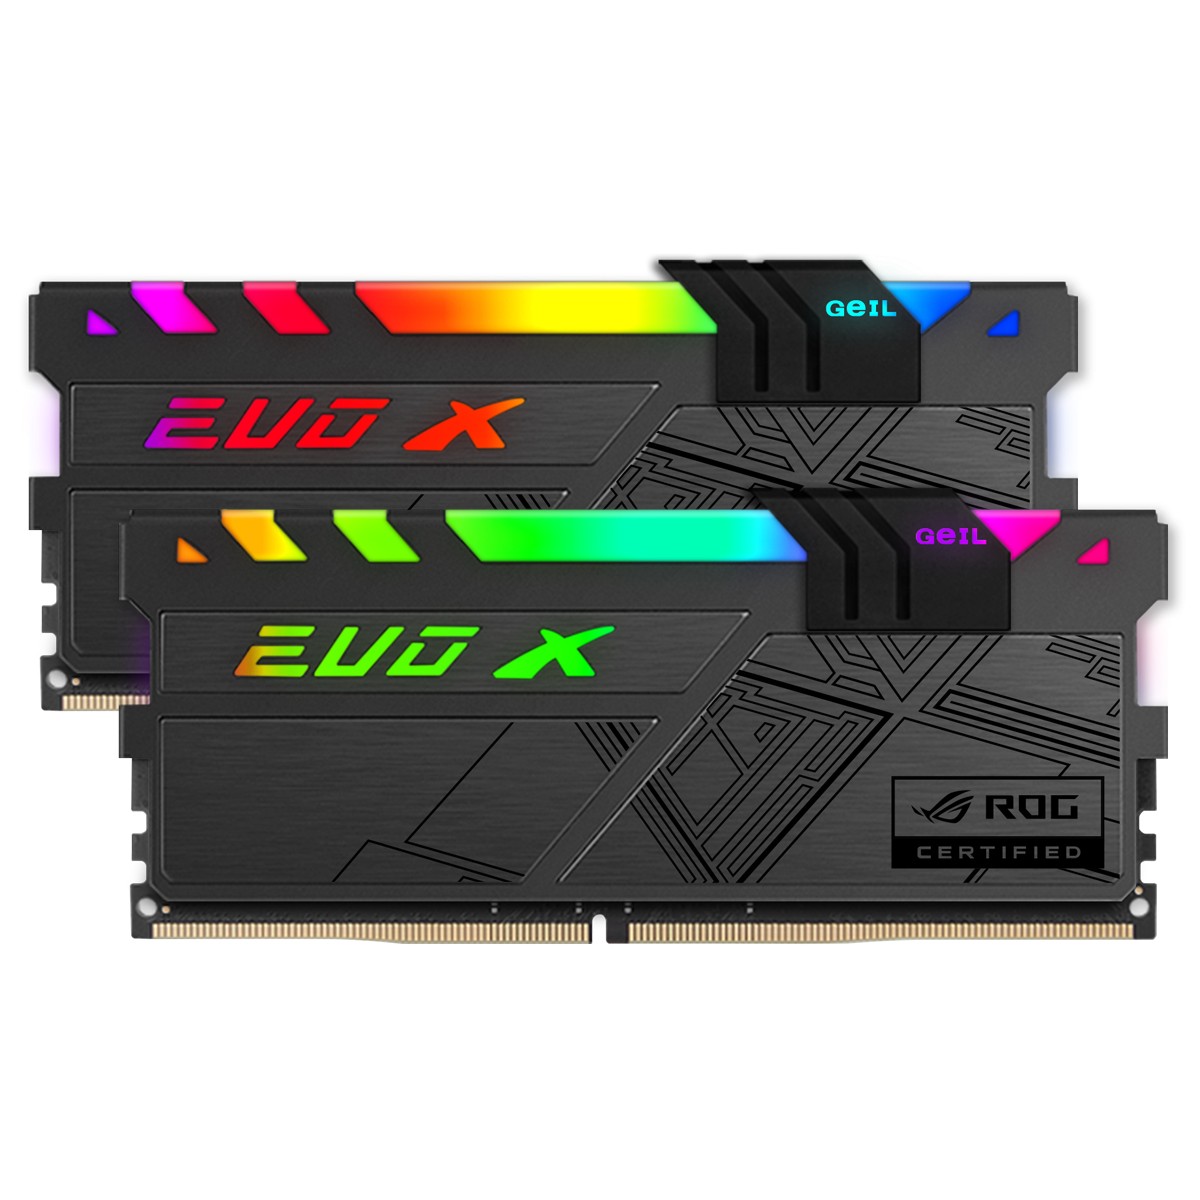 Memória DDR4 Geil EVO X II RGB, 16GB (2x8GB) 3200MHz, ROG CERTIFIED, BLACK, GREXSR416GB3200C16ADC